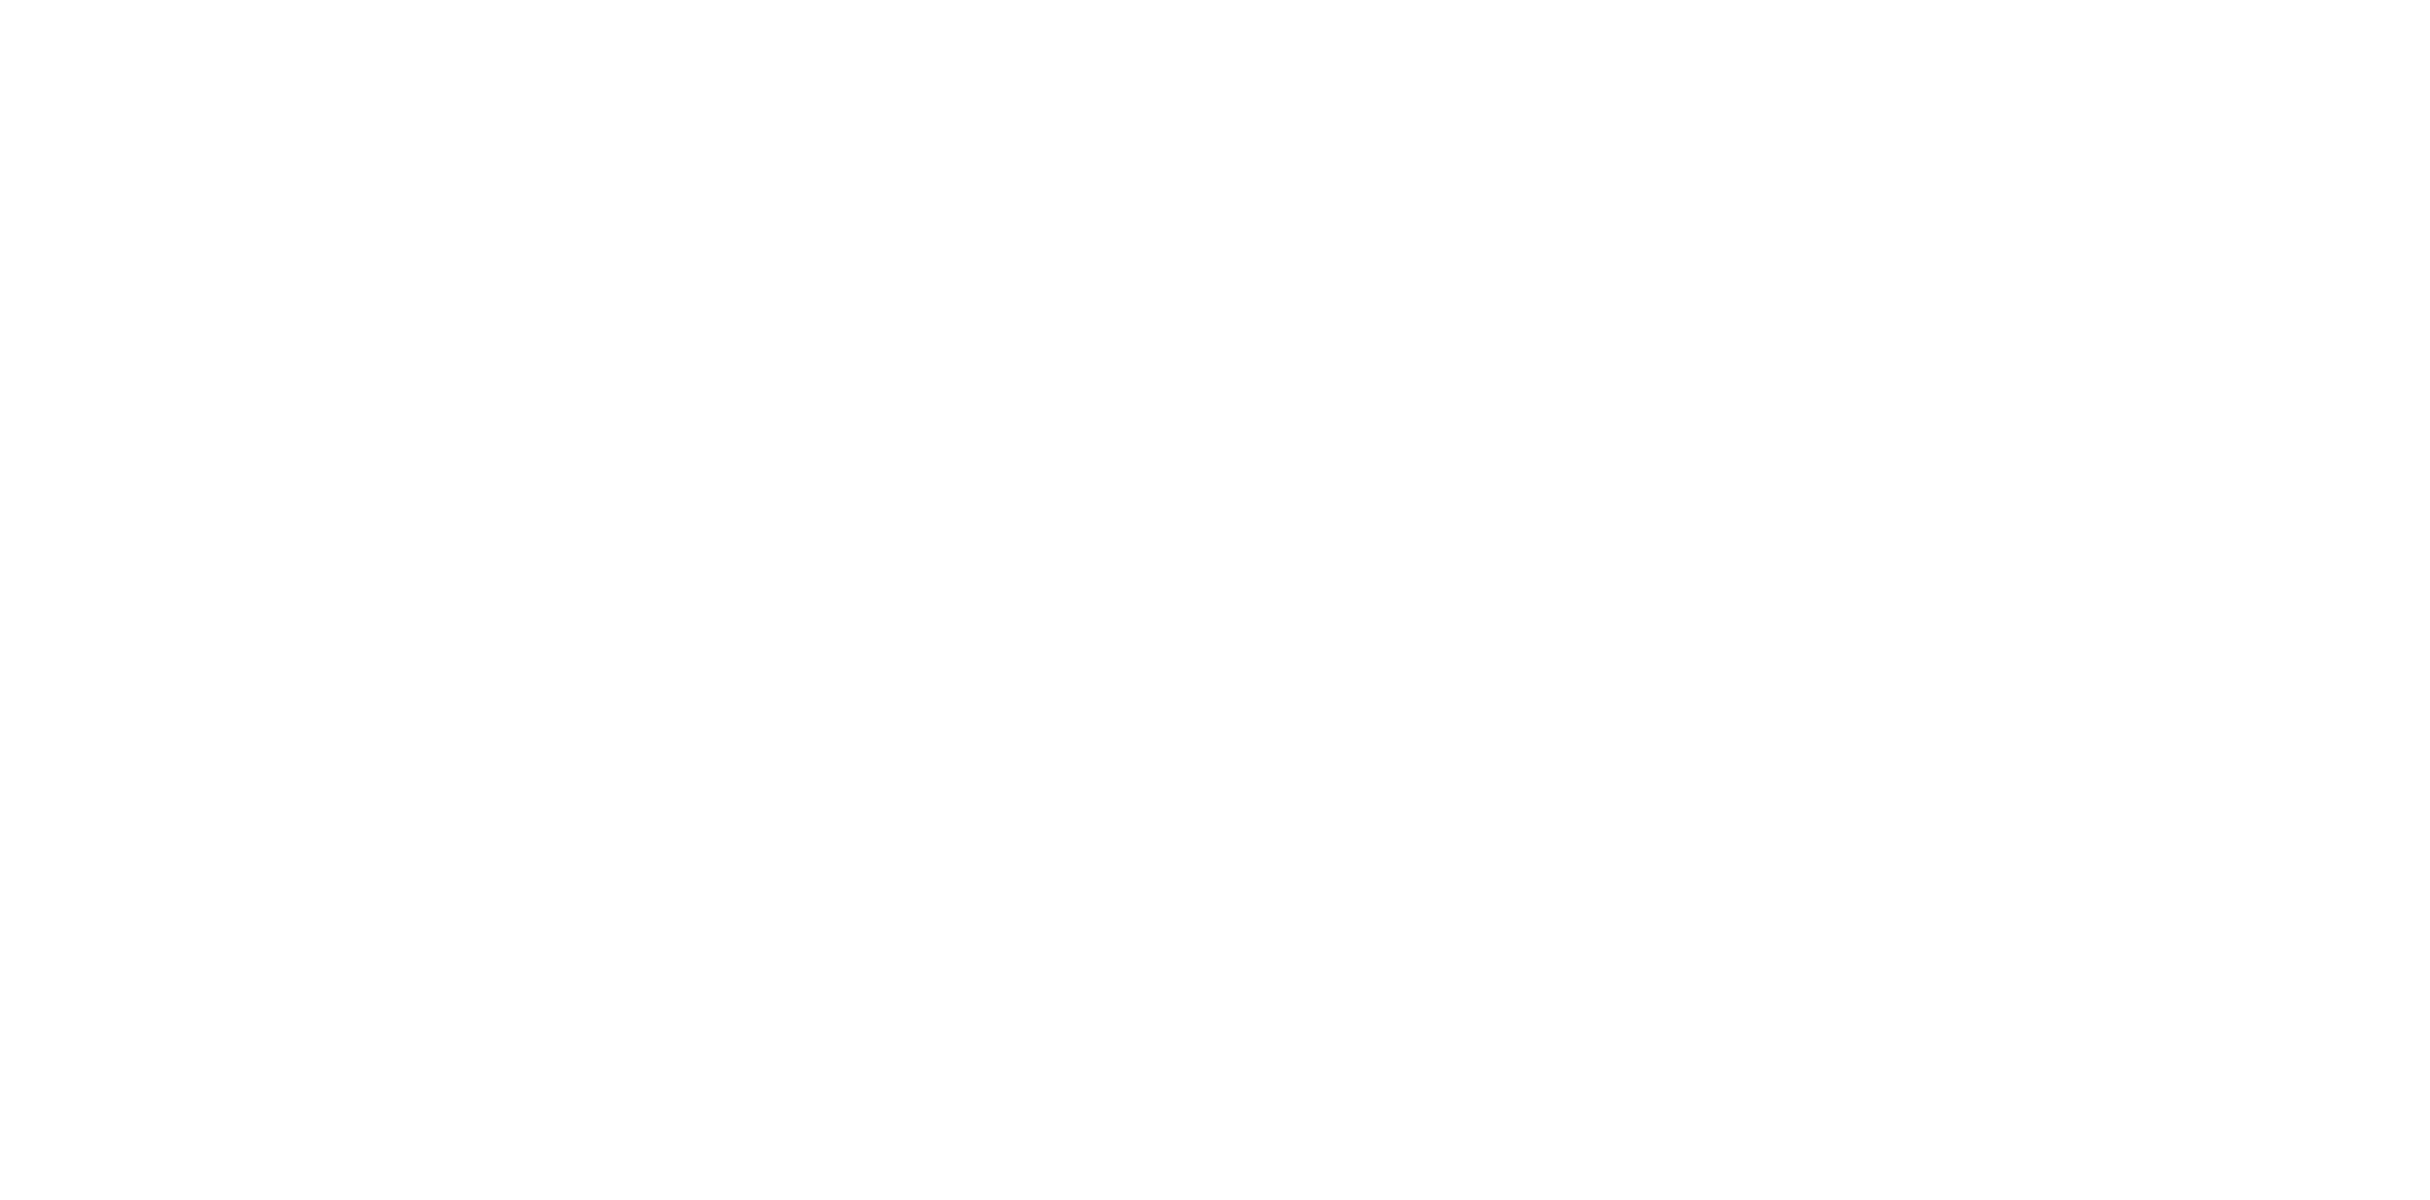 Utah Life Elevated.